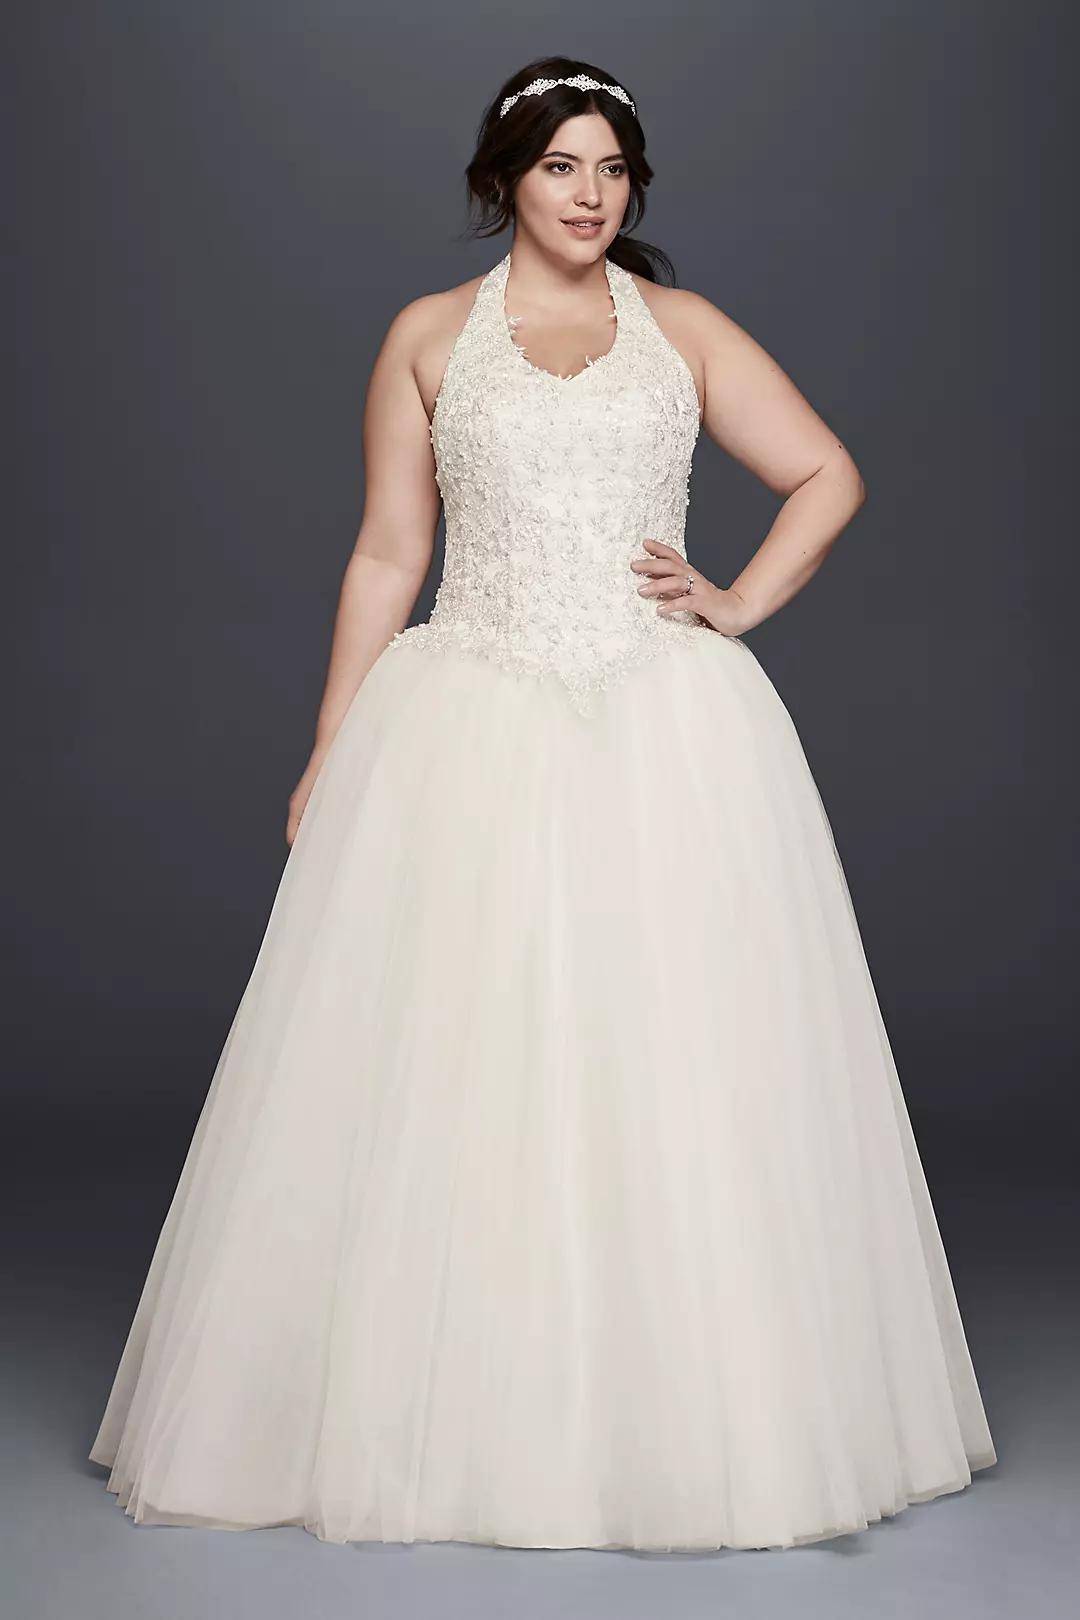 Basque Waist Plus Size Ball Gown Wedding Dress Image